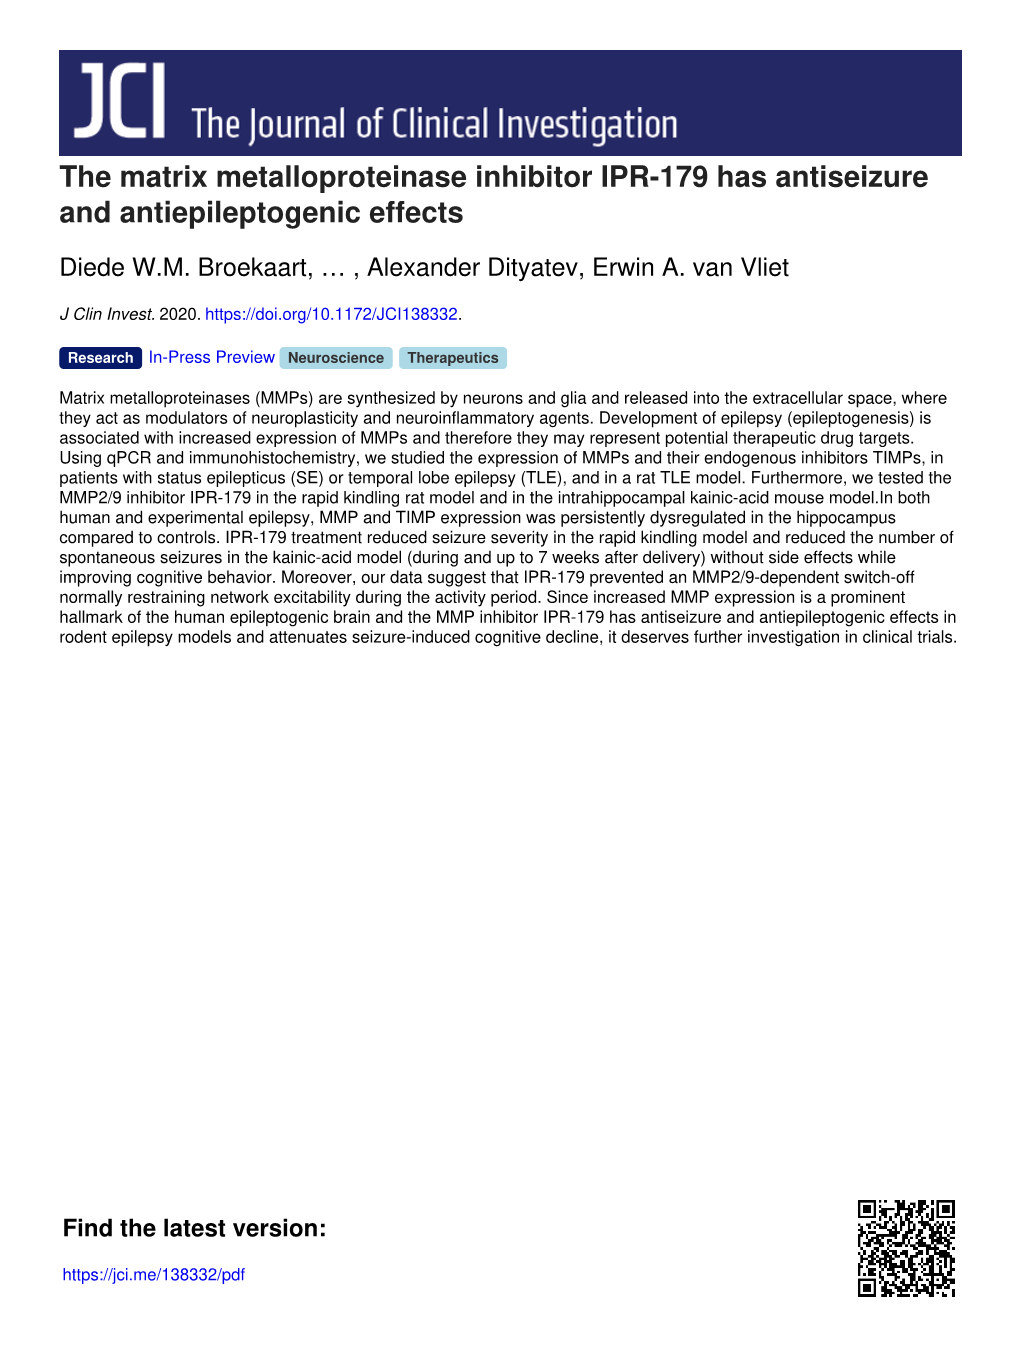 The Matrix Metalloproteinase Inhibitor IPR-179 Has Antiseizure and Antiepileptogenic Effects